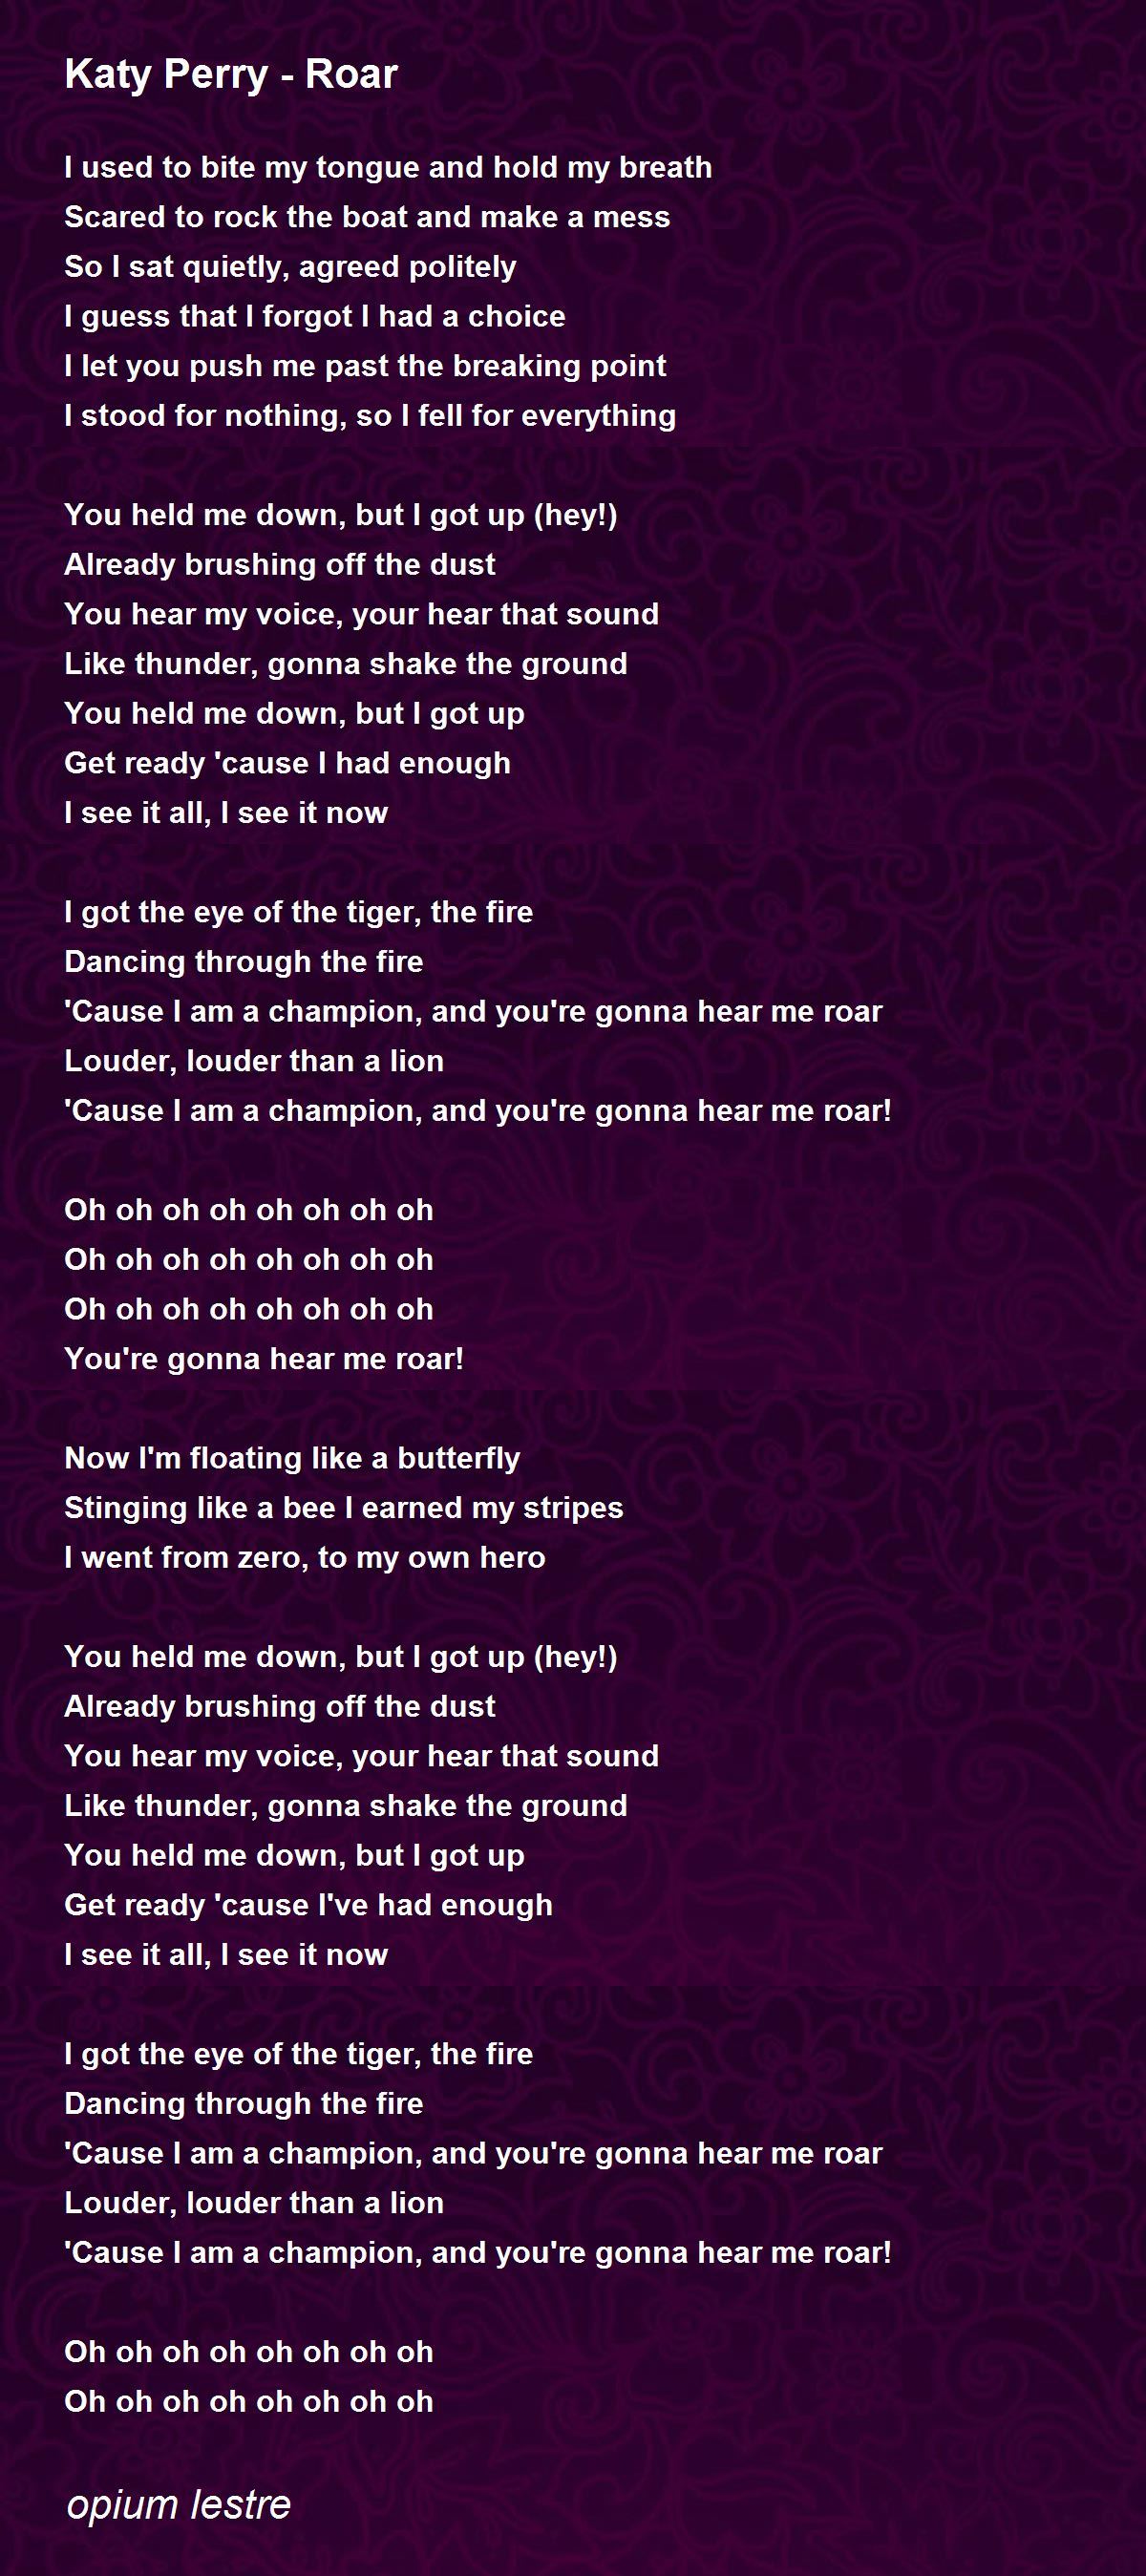 Roar - Katy Perry song lyrics @musicismylife5179 